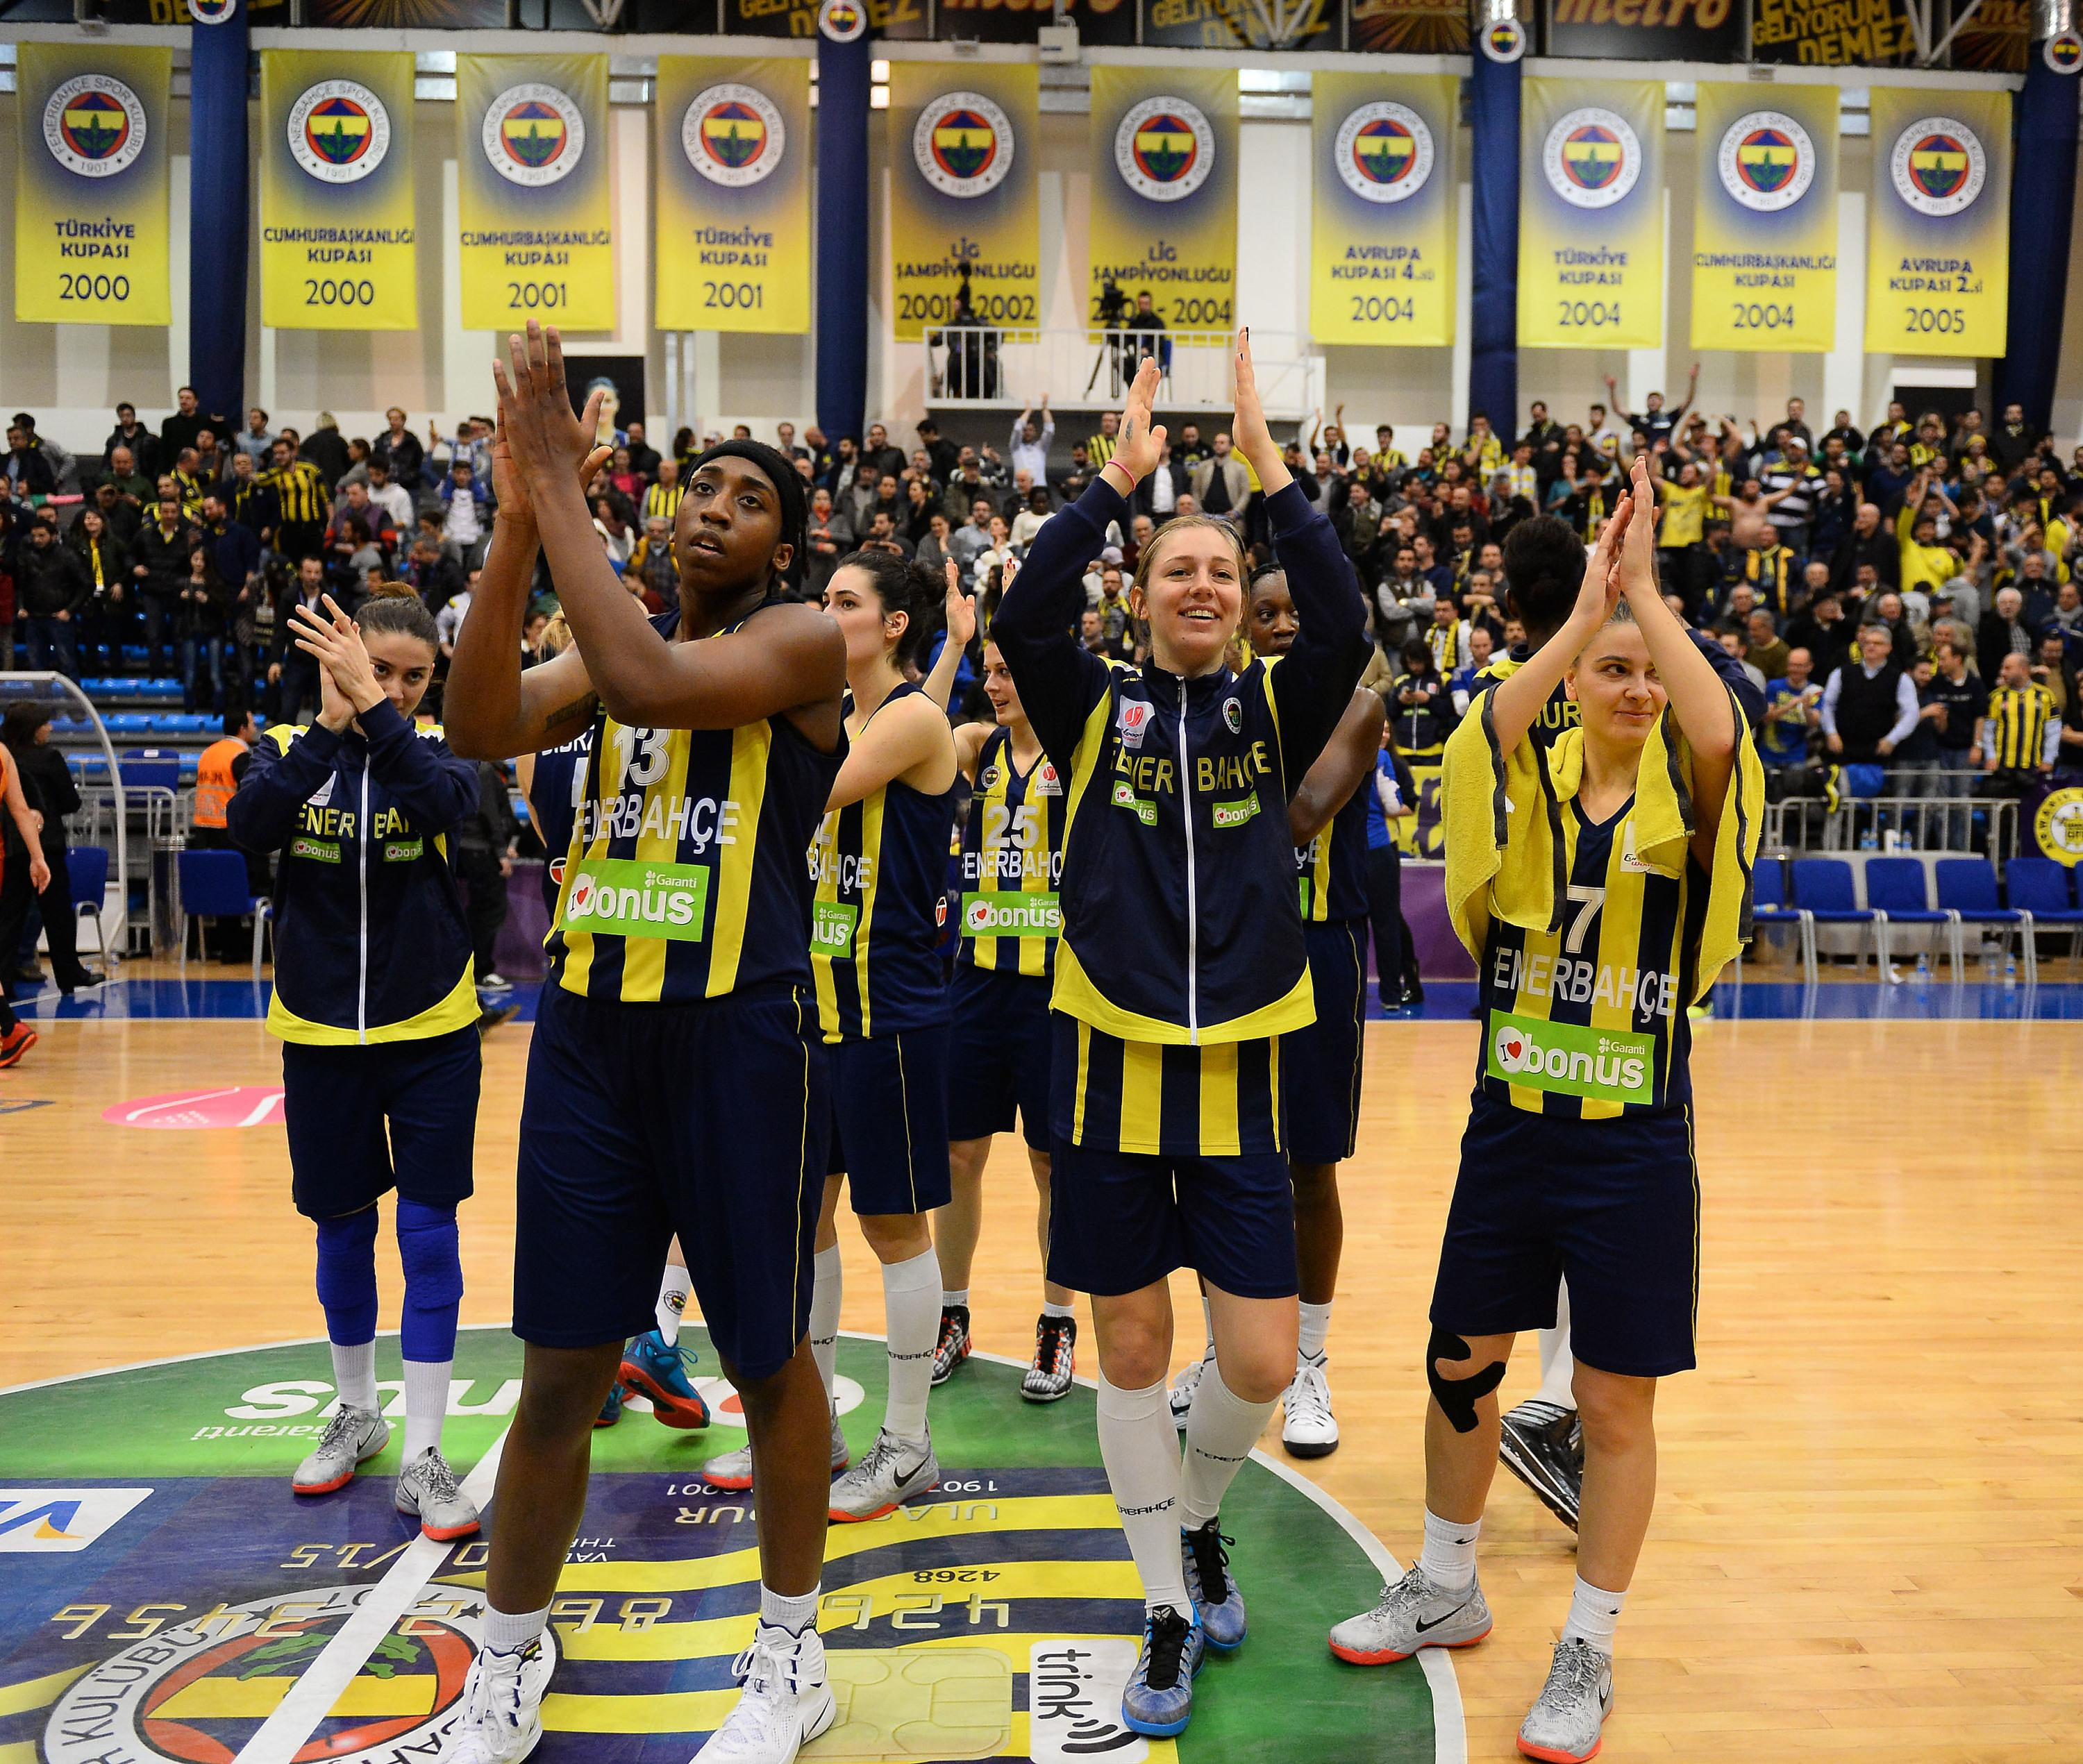 Basketball: Fenerbahçe will be Villeneuve-d’Ascq’s opponent in the Women’s Euroleague final